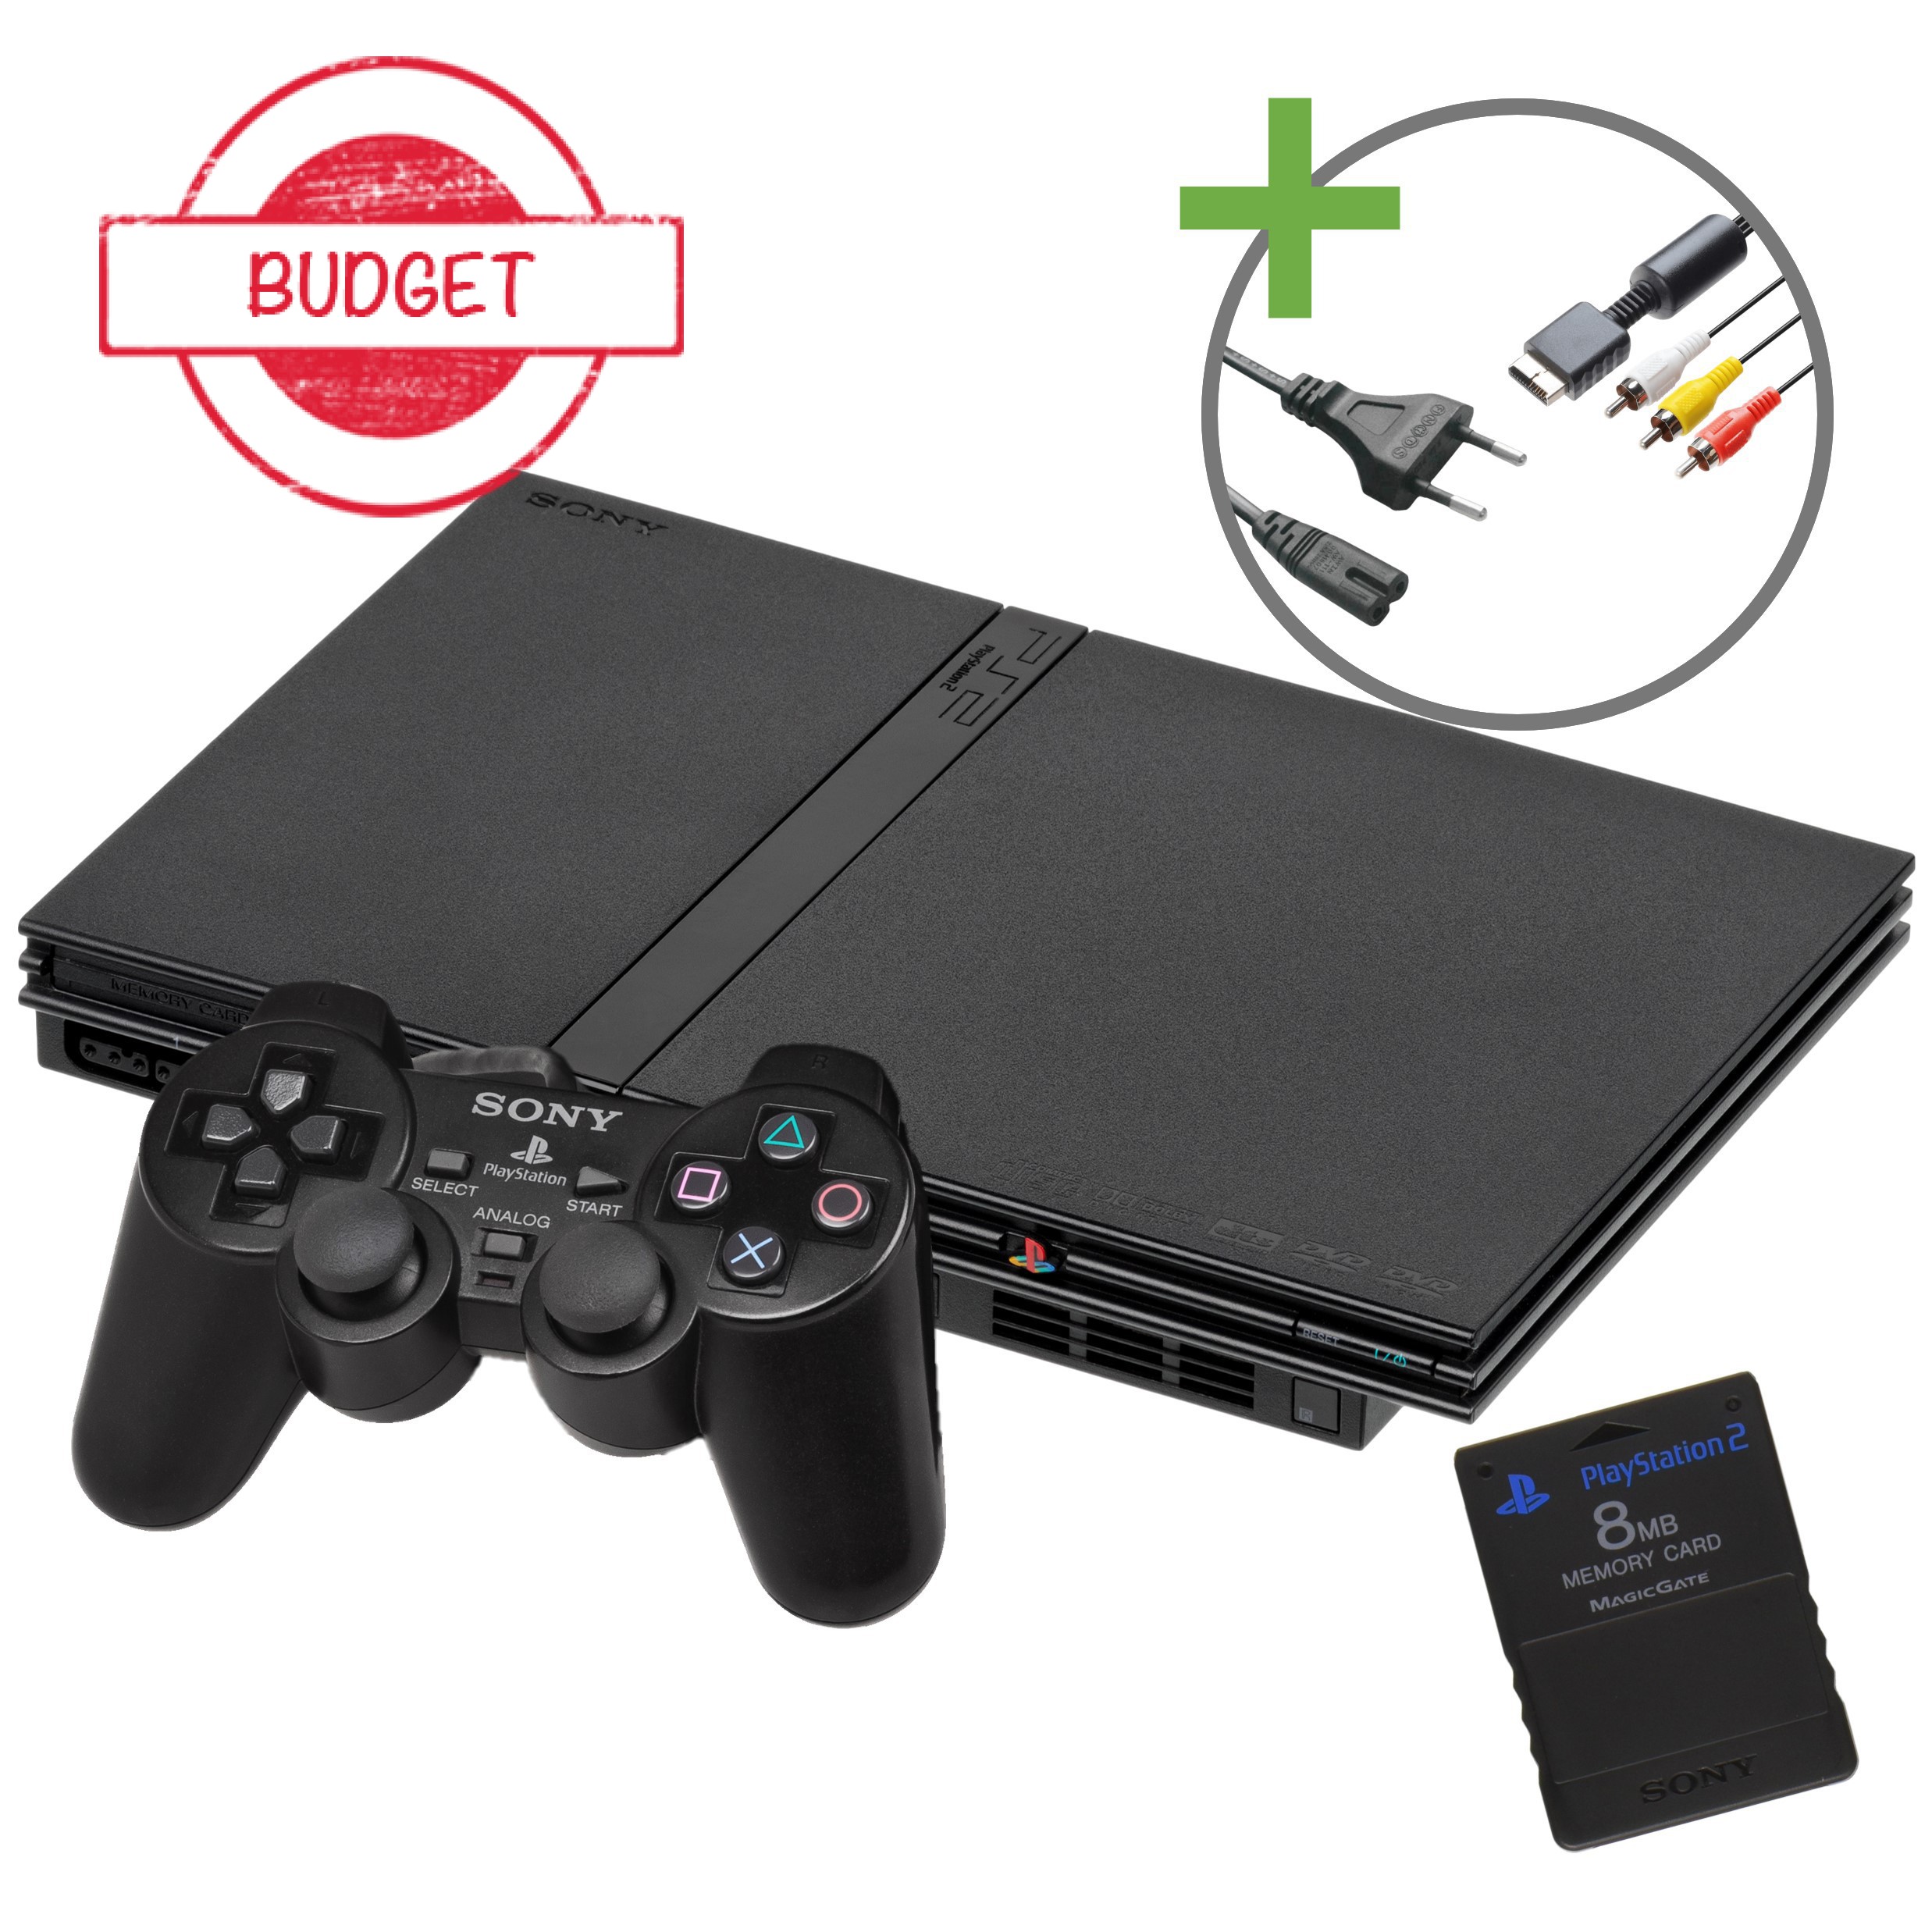 Sony PlayStation 2 Slim Starter Pack - Black Edition - Budget - Playstation 2 Hardware - 2